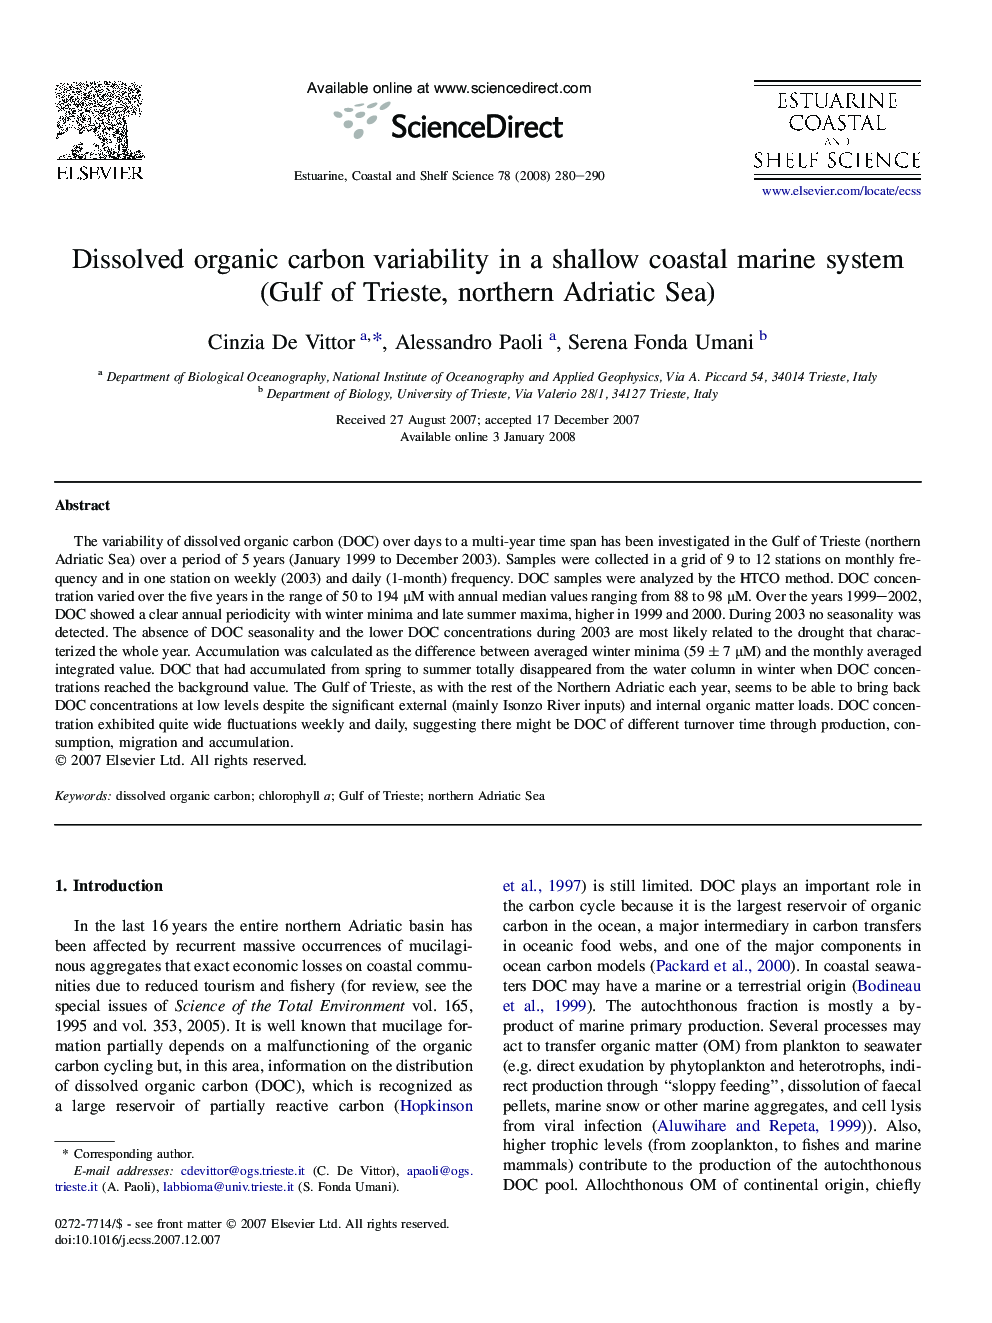 Dissolved organic carbon variability in a shallow coastal marine system (Gulf of Trieste, northern Adriatic Sea)